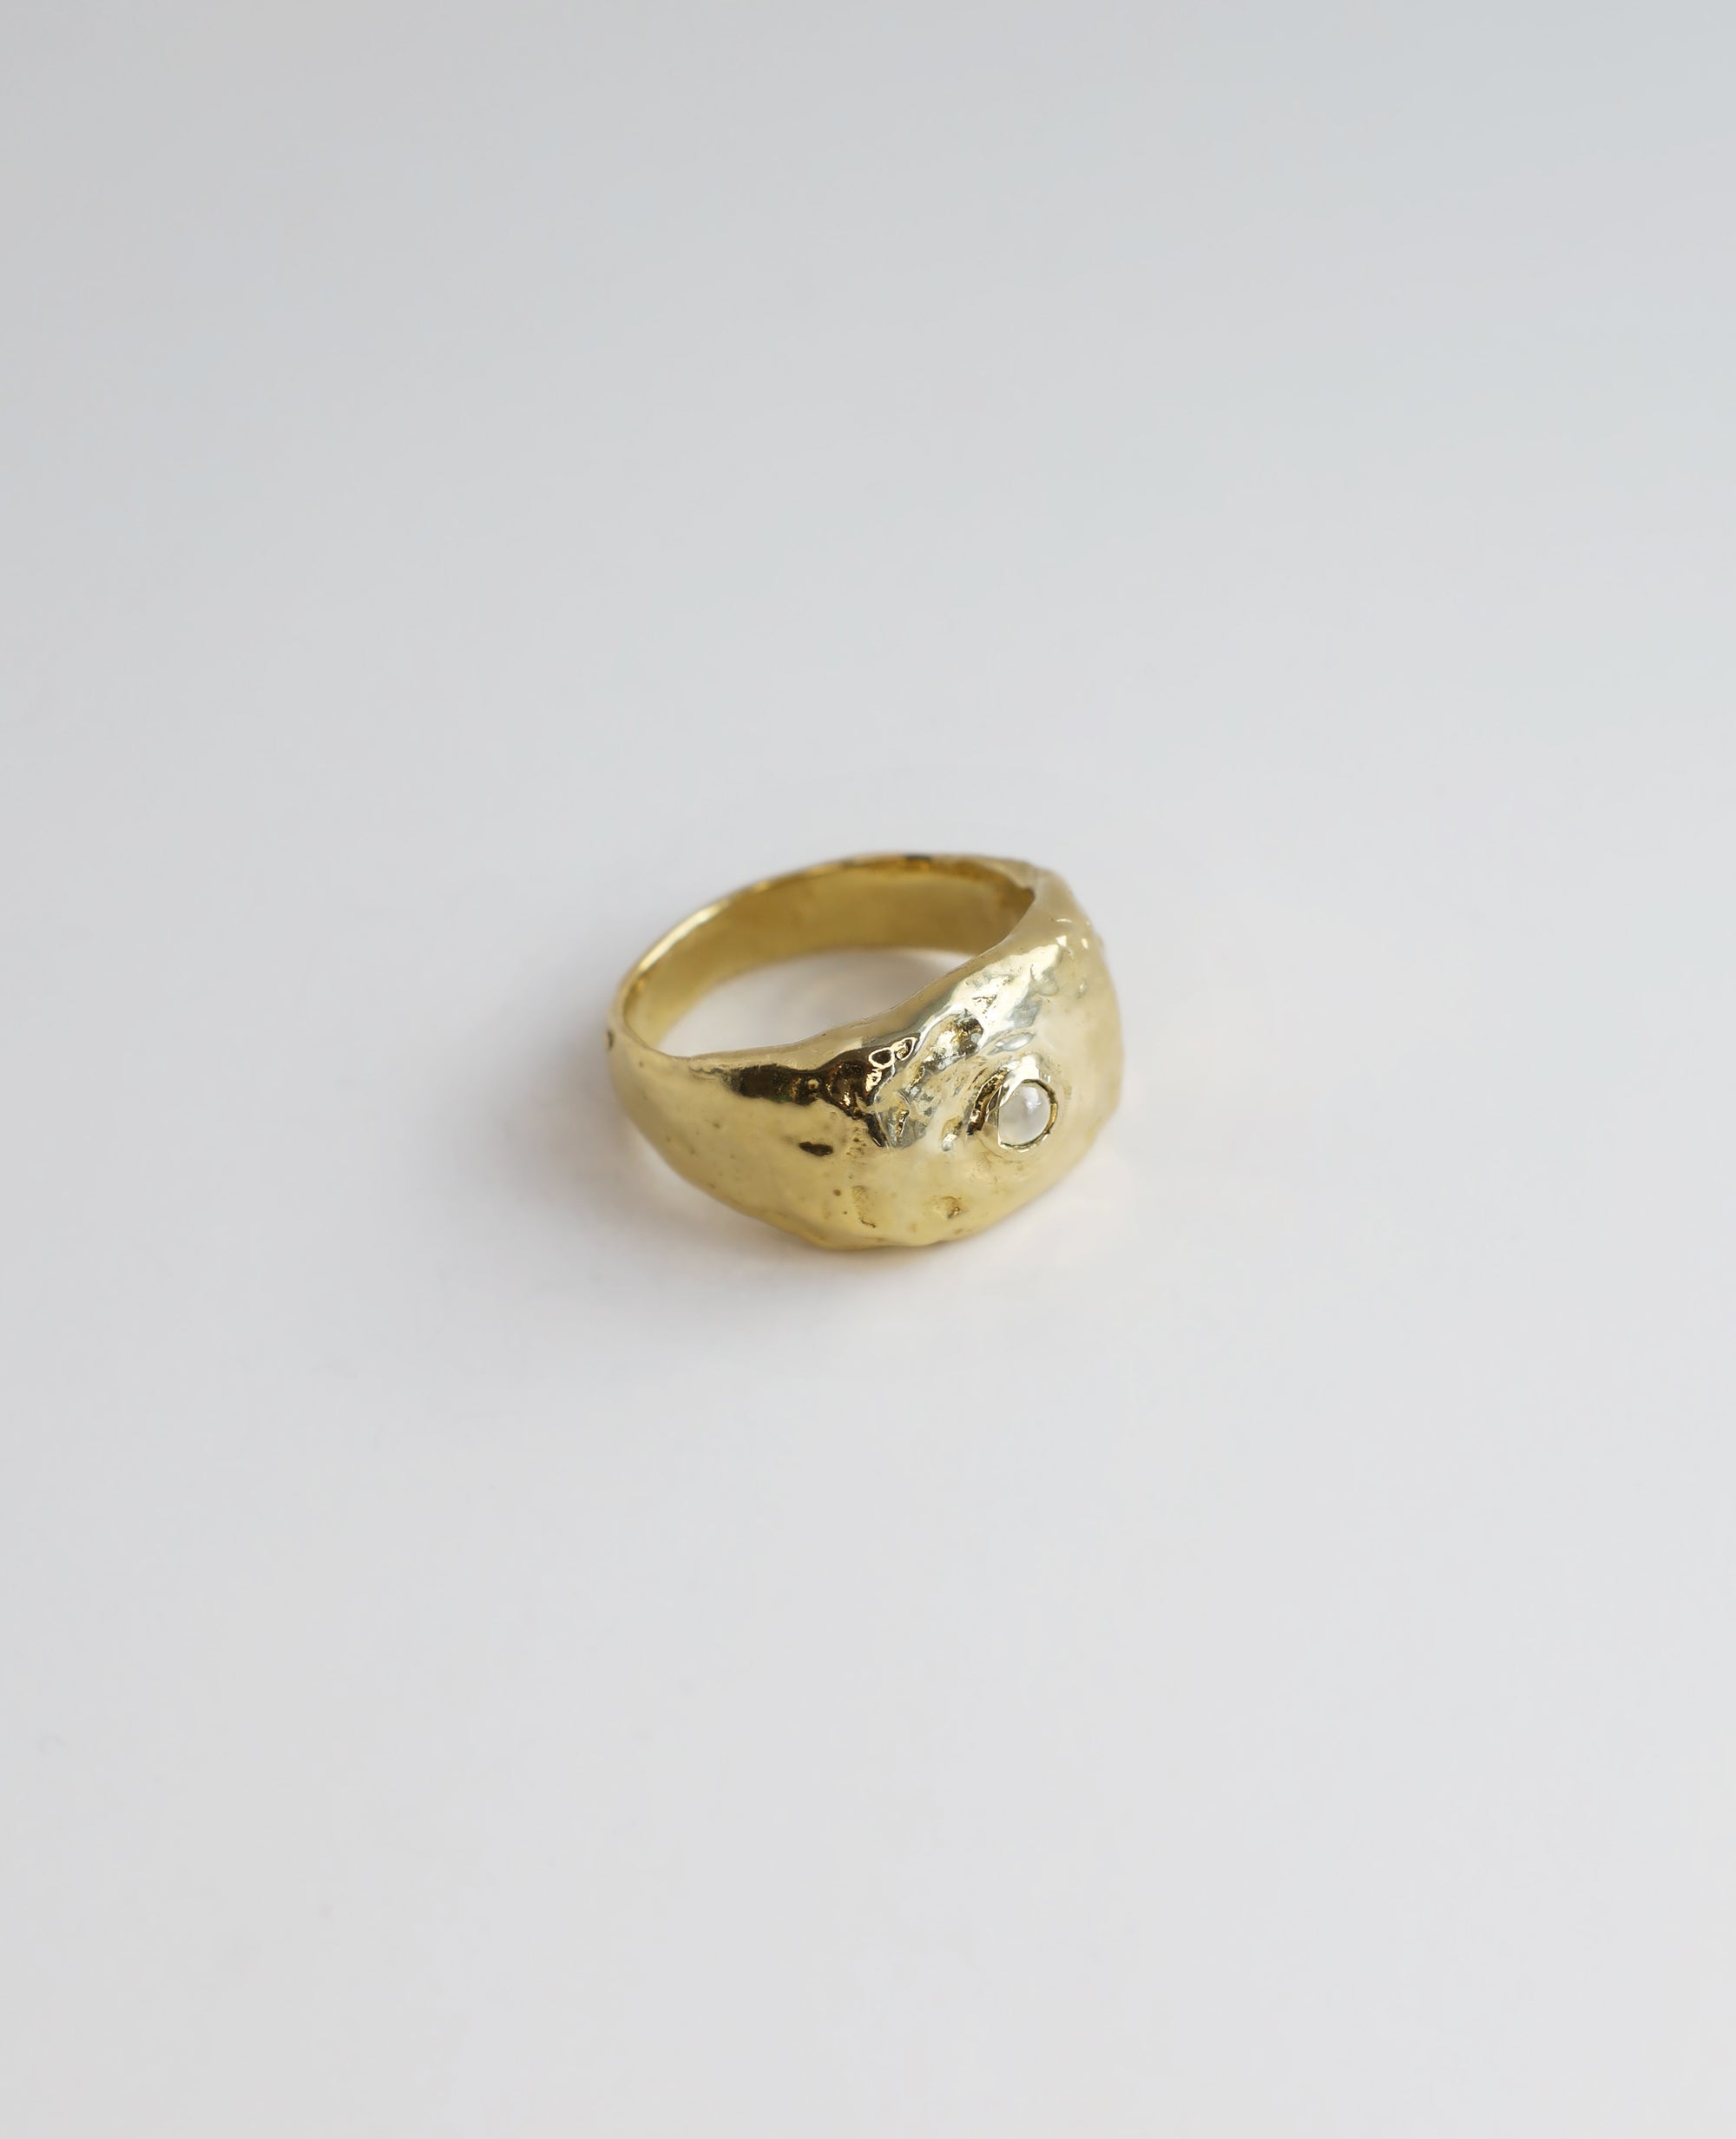 NUCLEUS SIGNET // silver ring - ORA-C jewelry - handmade jewelry by Montreal based independent designer Caroline Pham